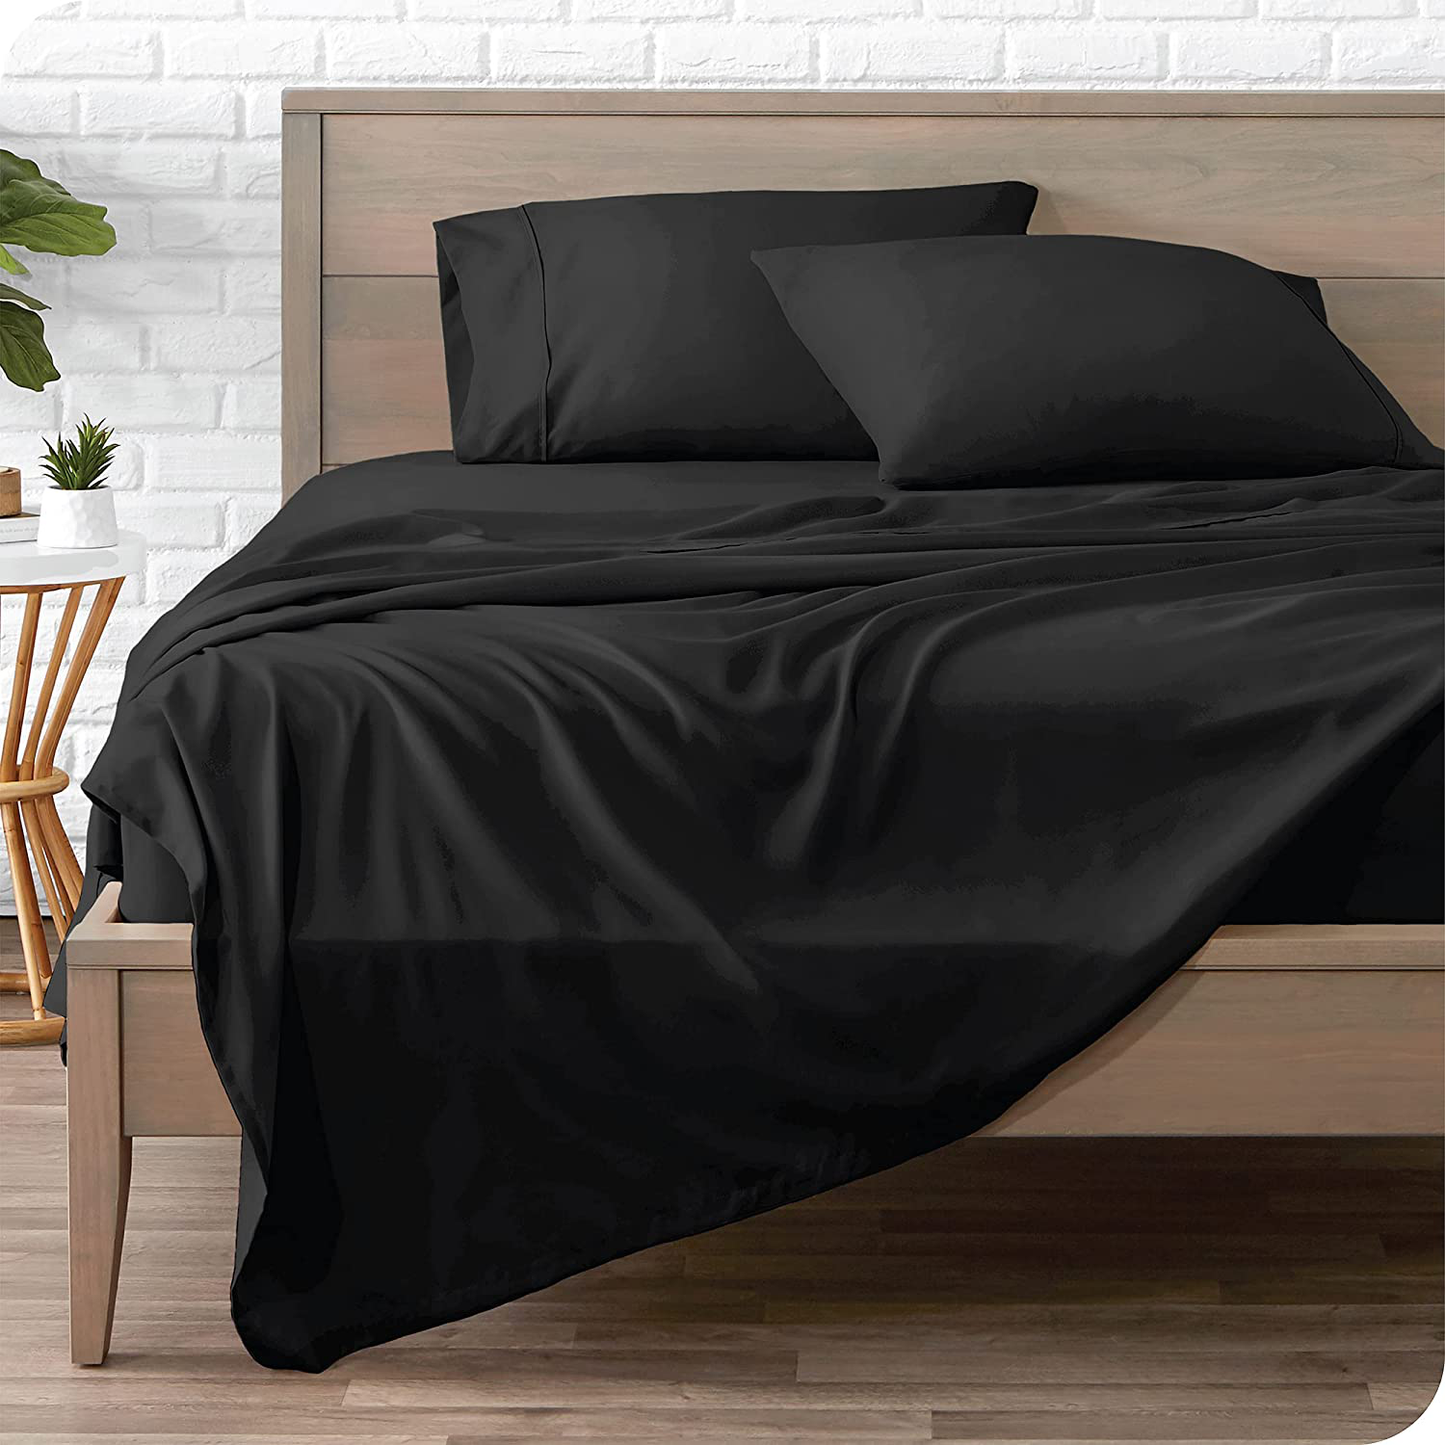 Bare Home Full Sheet Set - 1800 Ultra-Soft Microfiber Full Bed Sheets - Double Brushed - Full Sheets Set - Deep Pocket - Bedding Sheets & Pillowcases (Full, Black)